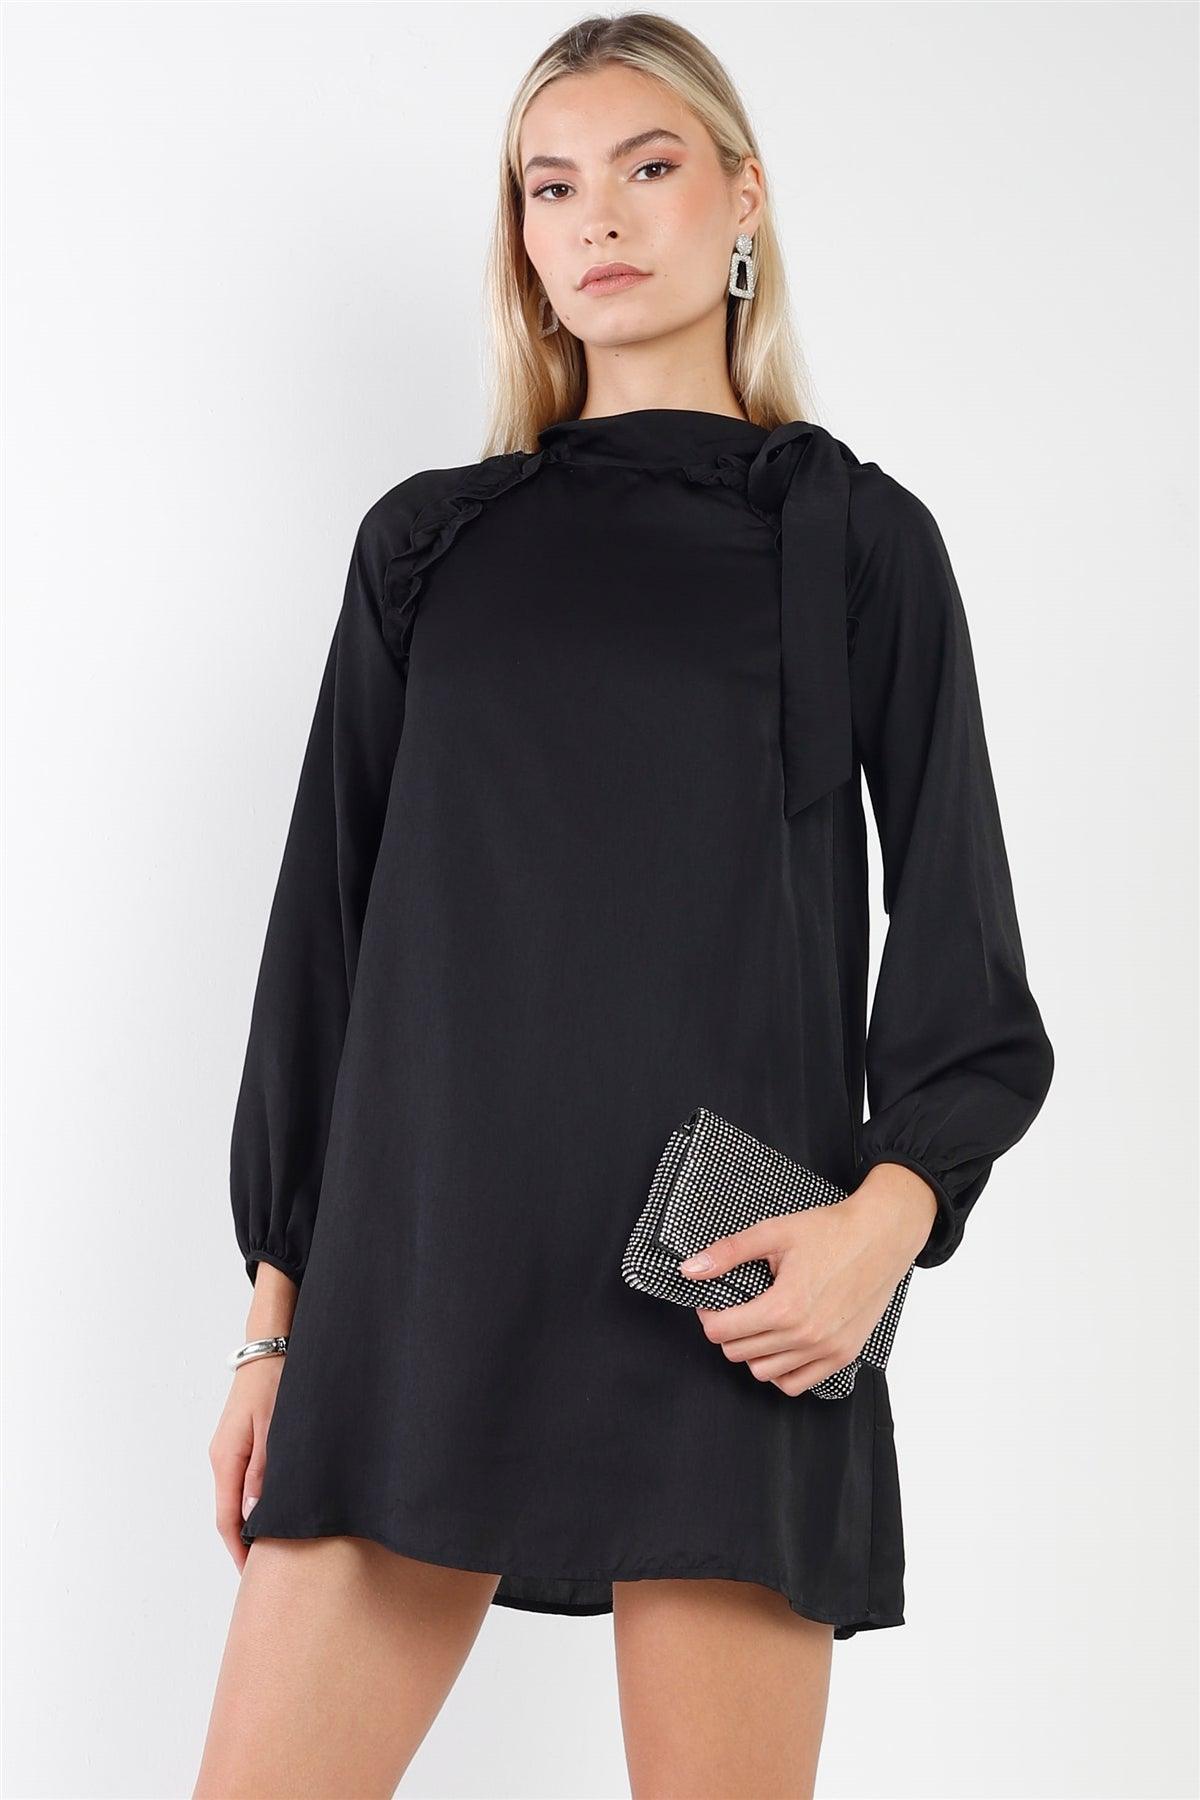 Black Satin Long Sleeve Side-Tie Mini Dress /2-2-2